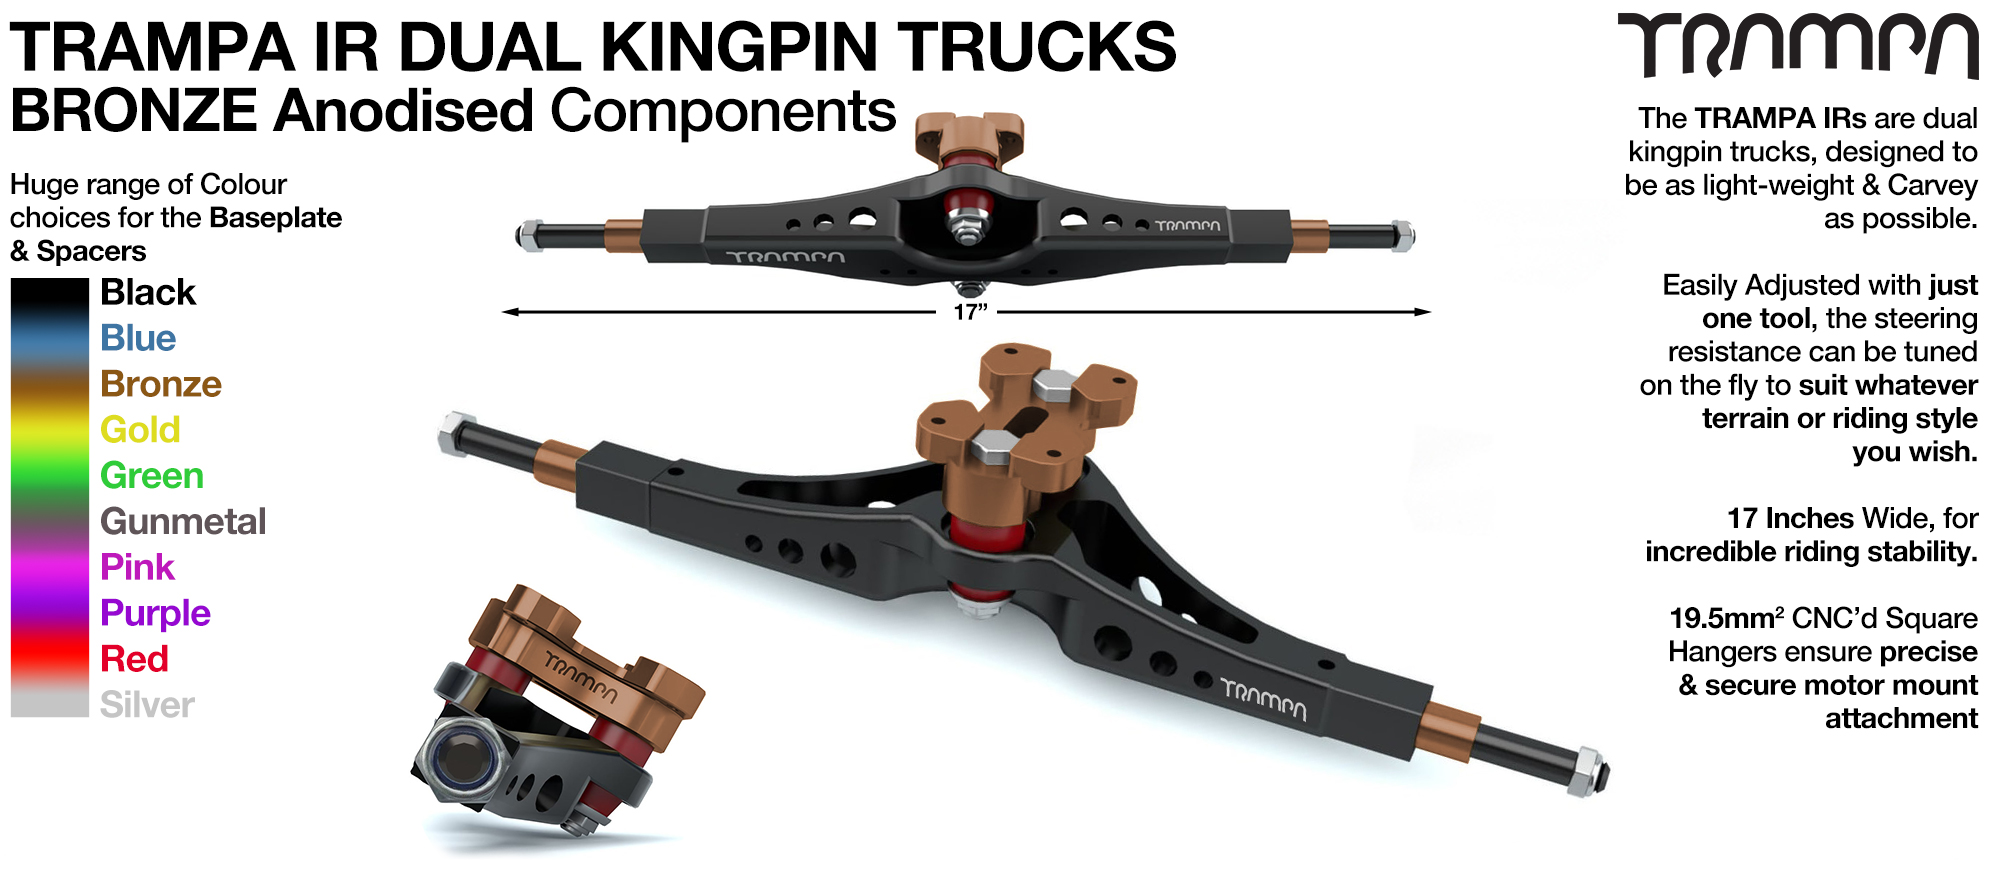 TRAMPA IR Double Kingpinned Skate Style Trucks fit every 19.1mm Motor Mount TRAMPA offers - BRONZE